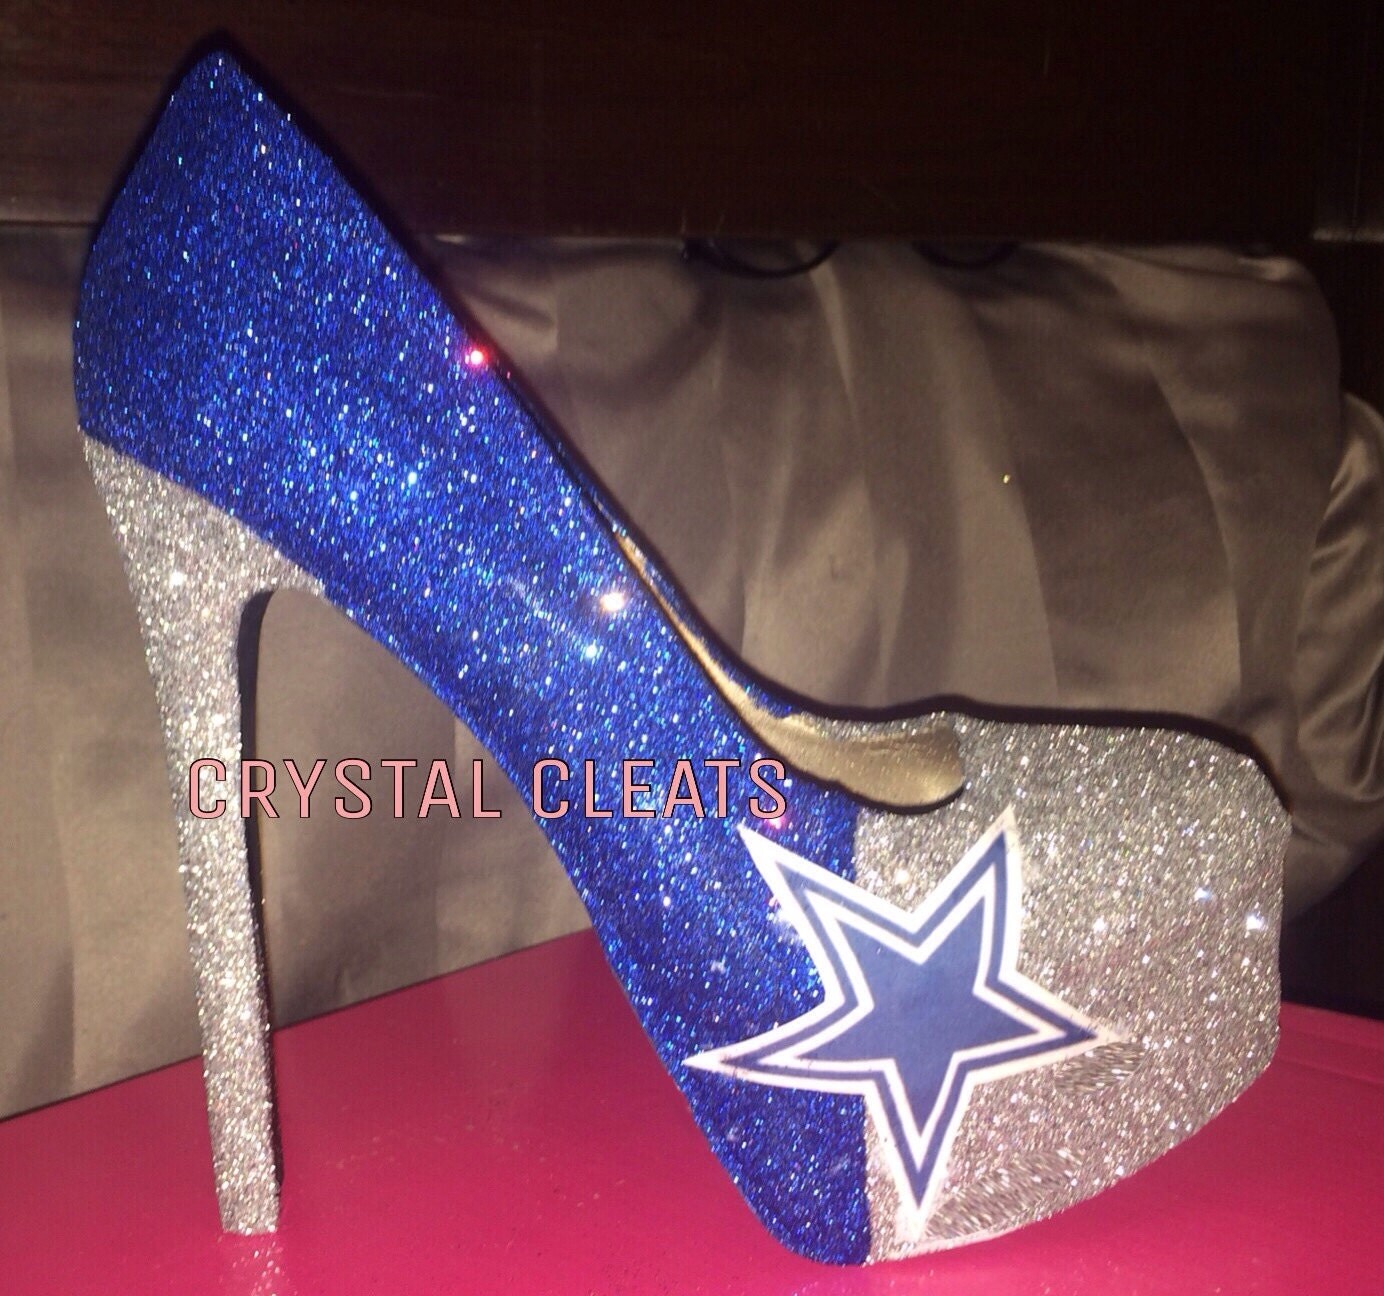 Dallas COWBOYS Football high heel stiletto shoes by CrystalCleatss